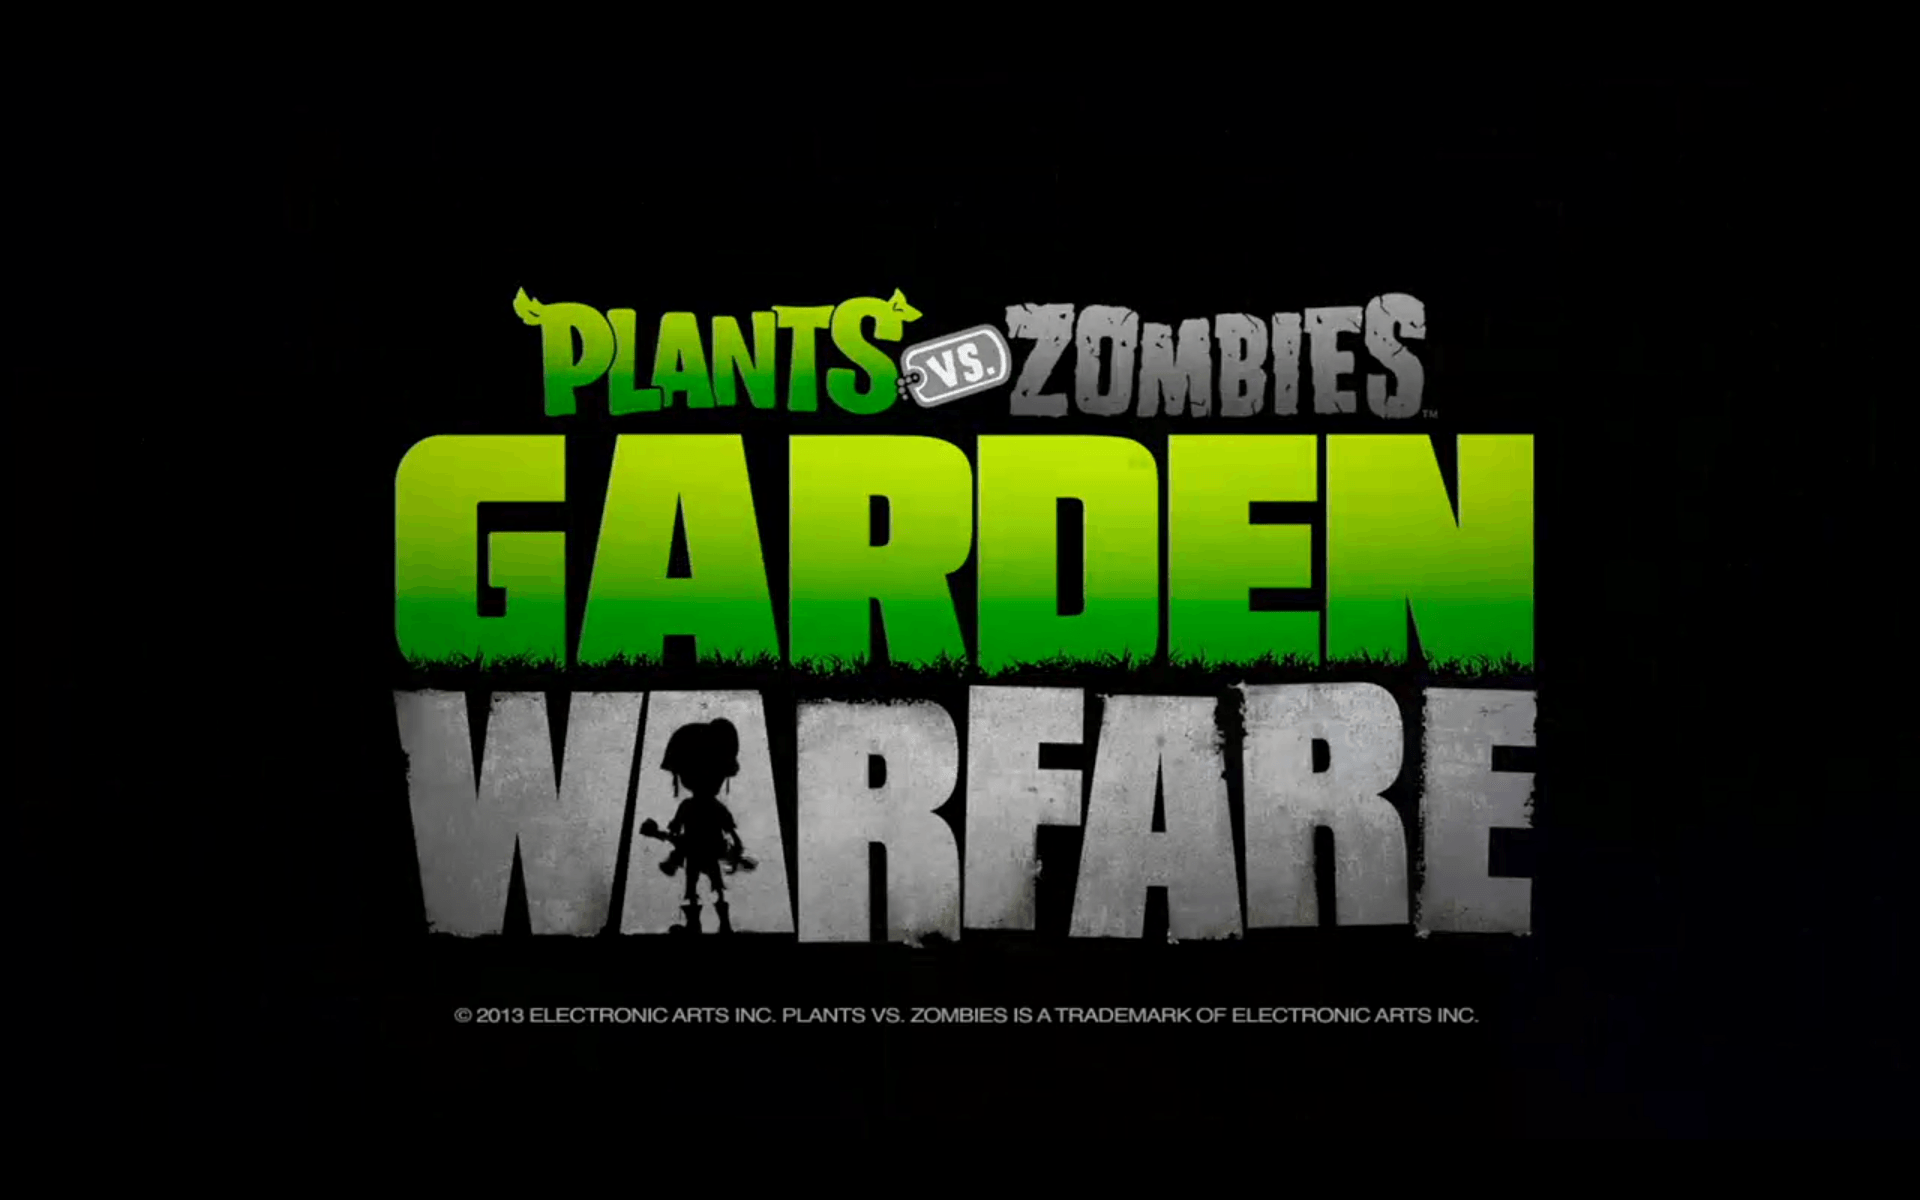 Download Wallpaper 1920x1200 Plants vs zombies garden warfare, Pc